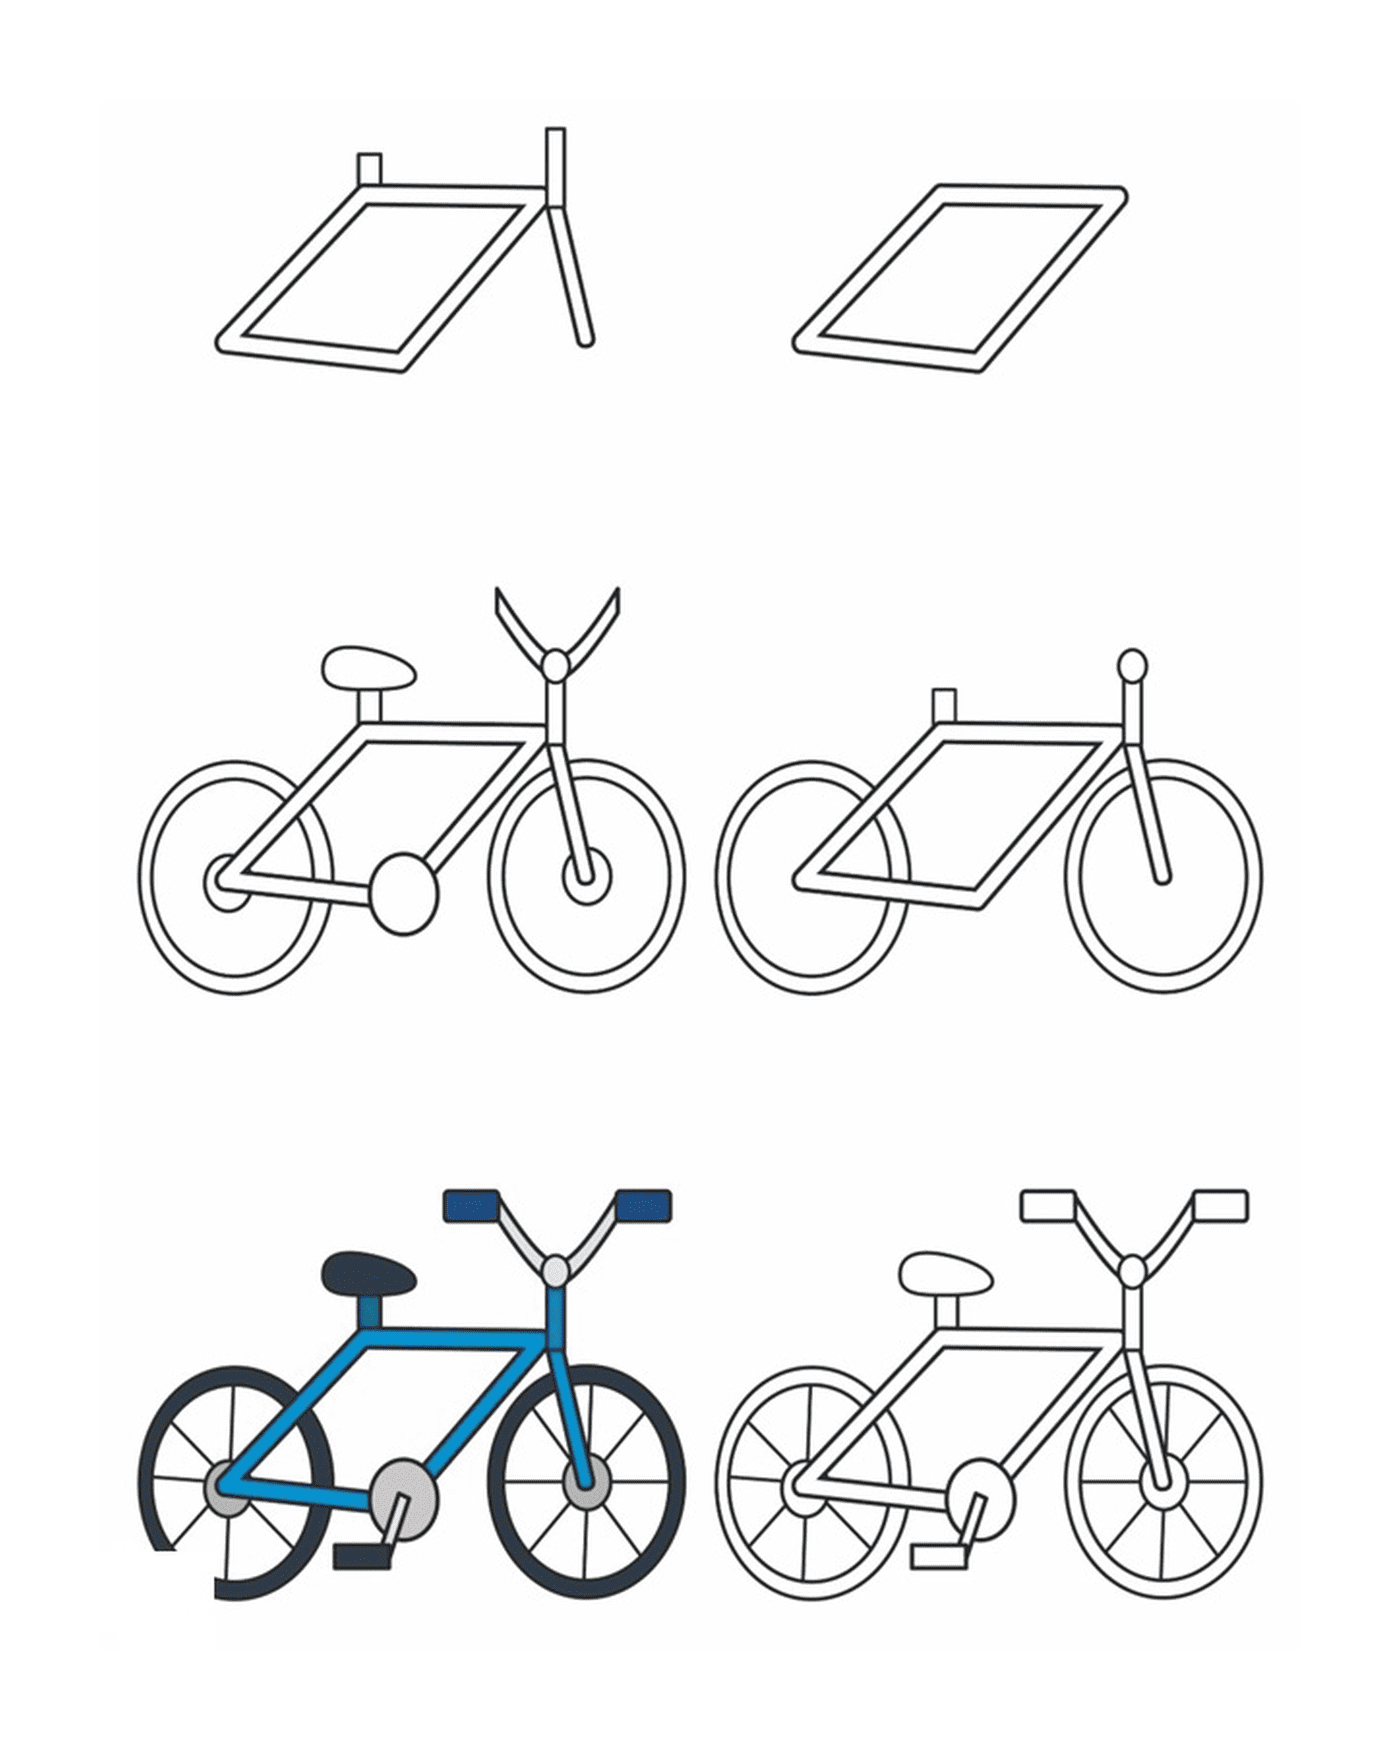  Cómo dibujar una bicicleta 